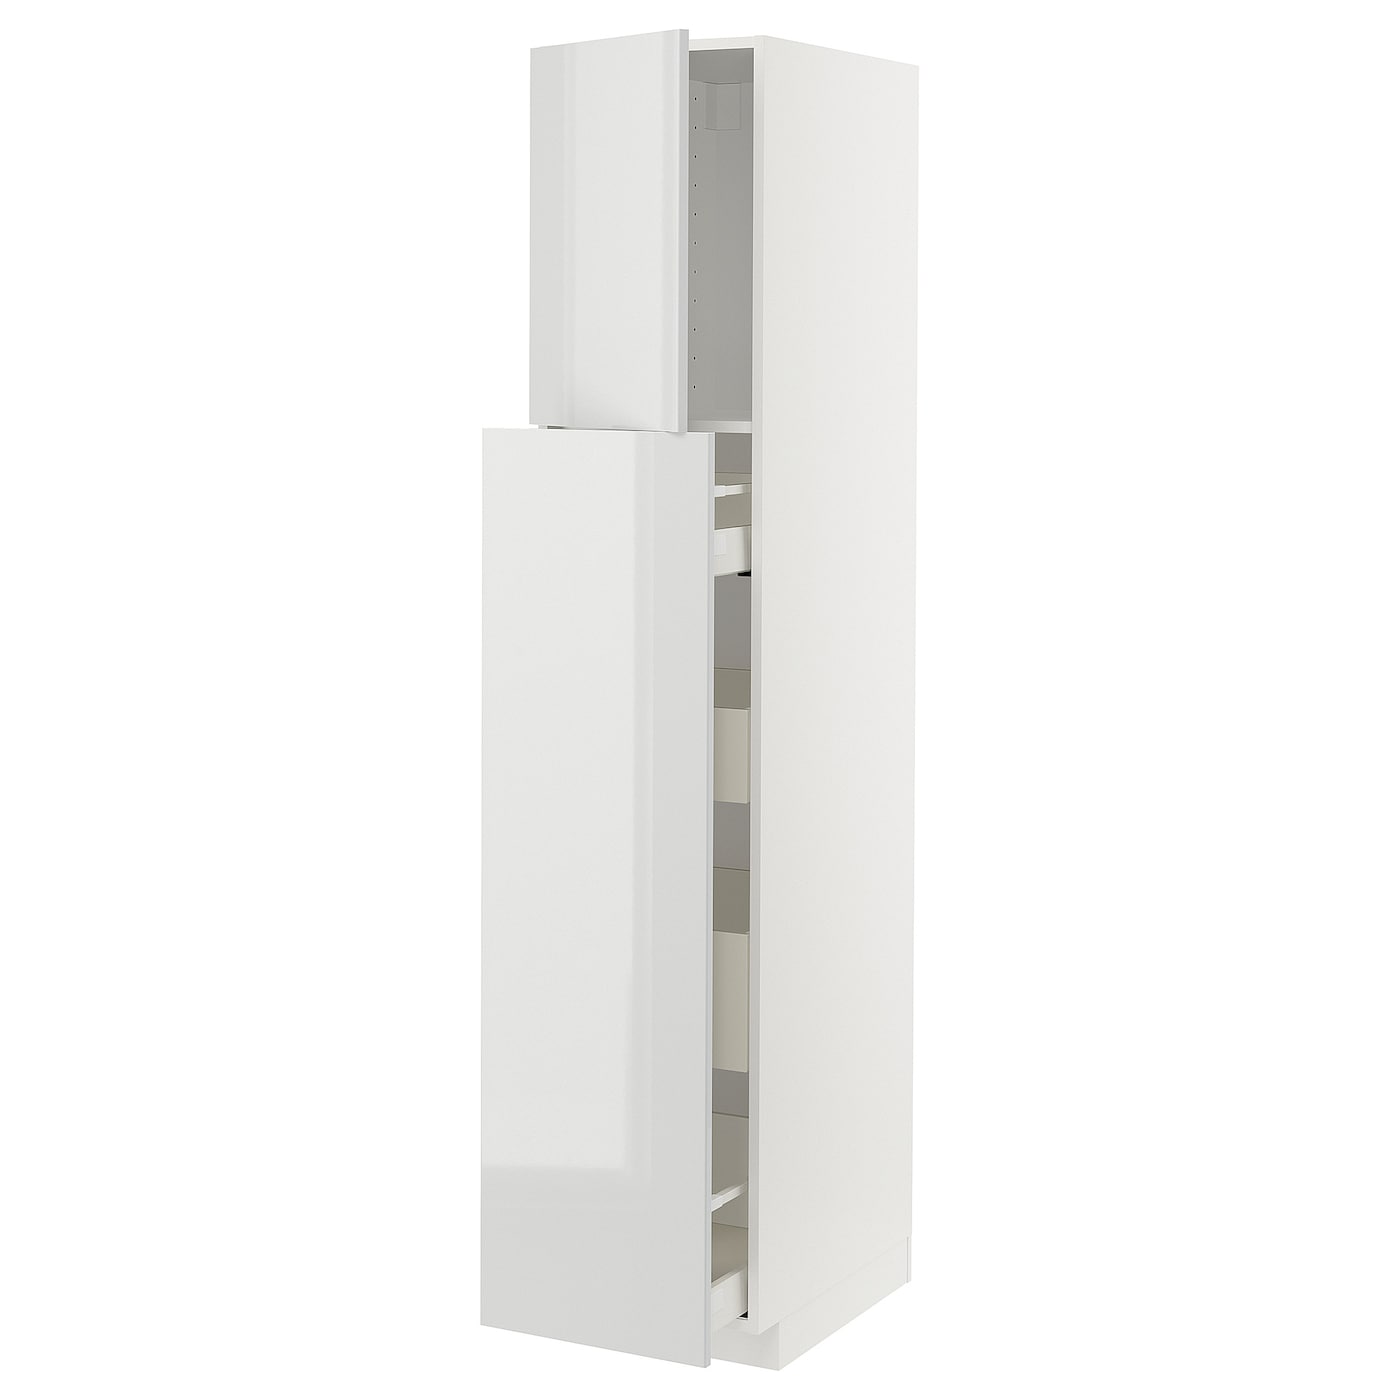 Высокий шкаф - IKEA METOD/MAXIMERA/МЕТОД/МАКСИМЕРА ИКЕА, 200х60х40 см, белый/светло-серый глянцевый